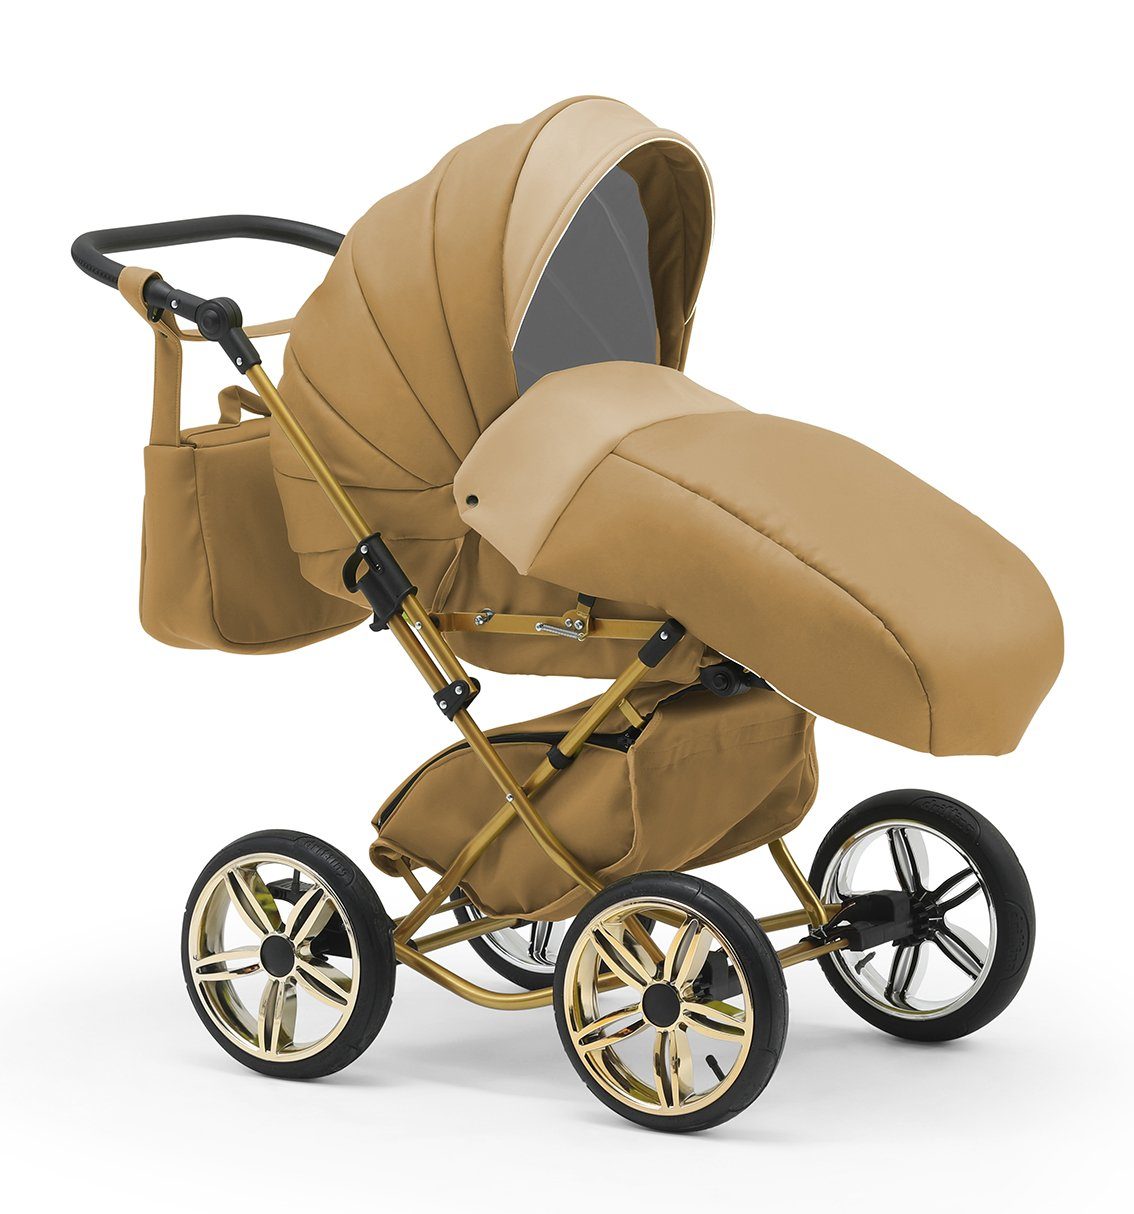 babies-on-wheels Kombi-Kinderwagen Sorento in 10 Beige in - 1 - Designs inkl. und Base 14 Autositz 4 Teile Iso